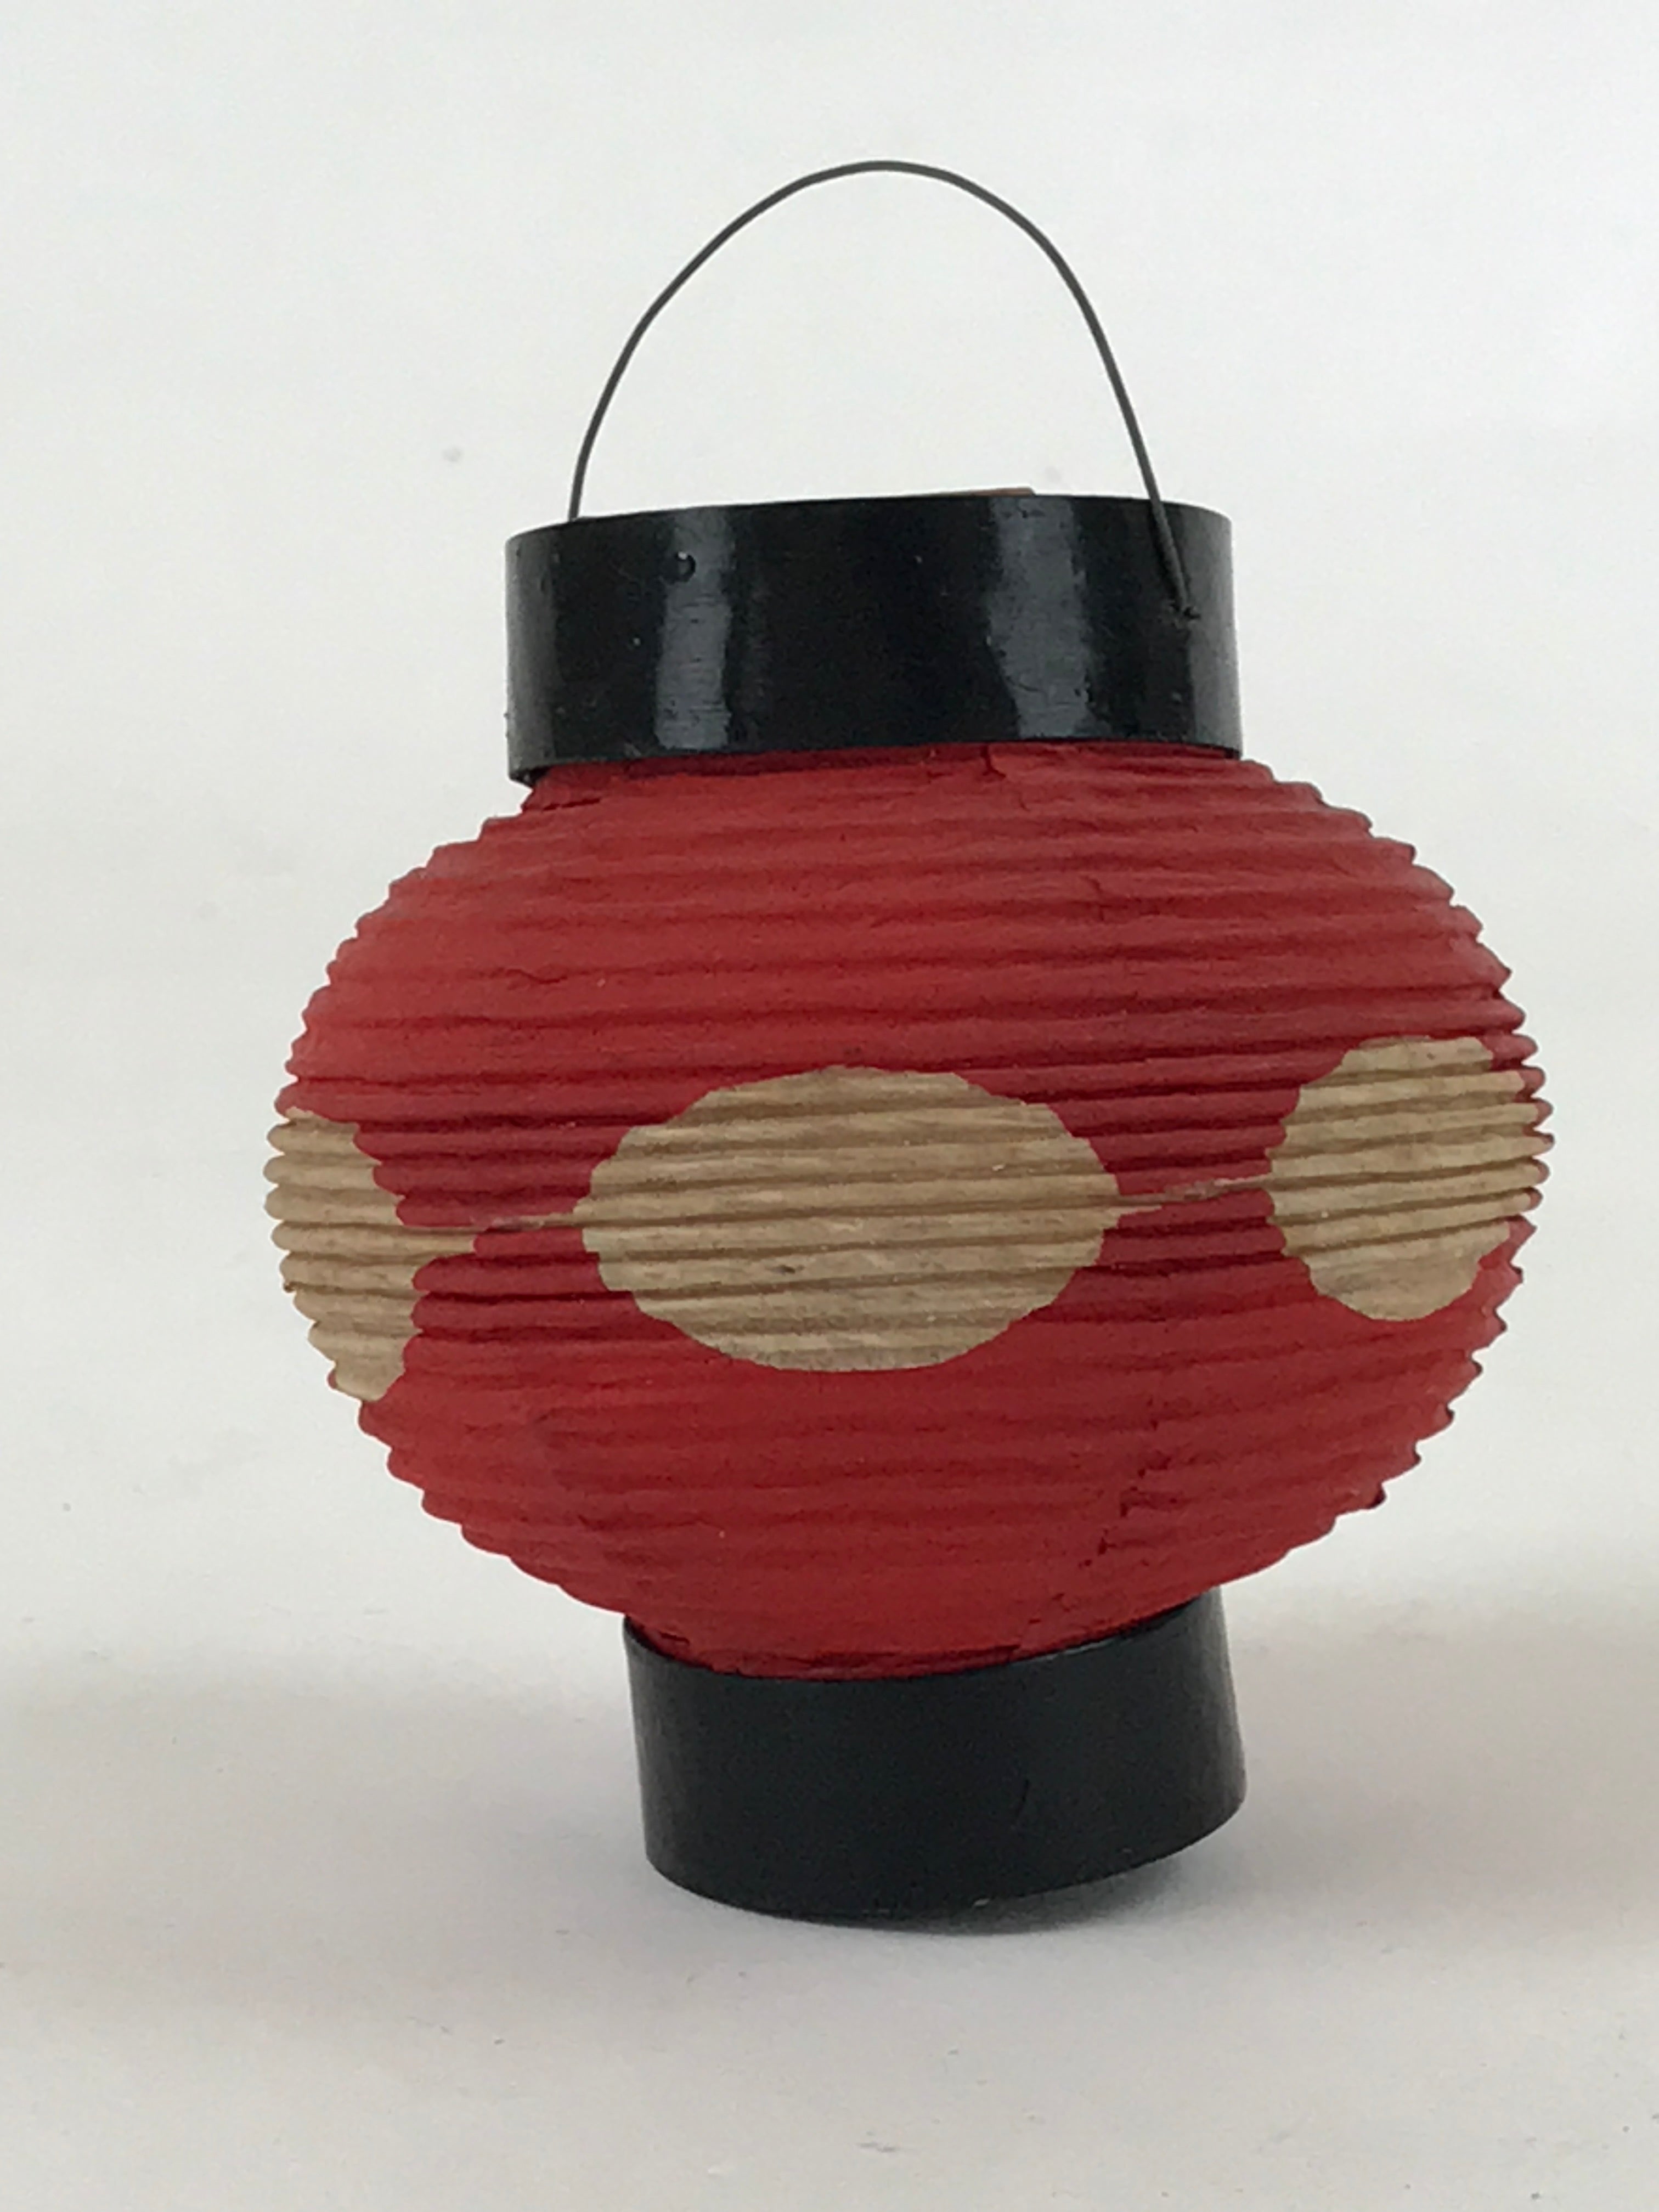 Japanese Hanging Paper Lantern Vtg Small Foldable Chochin Red Black JK573